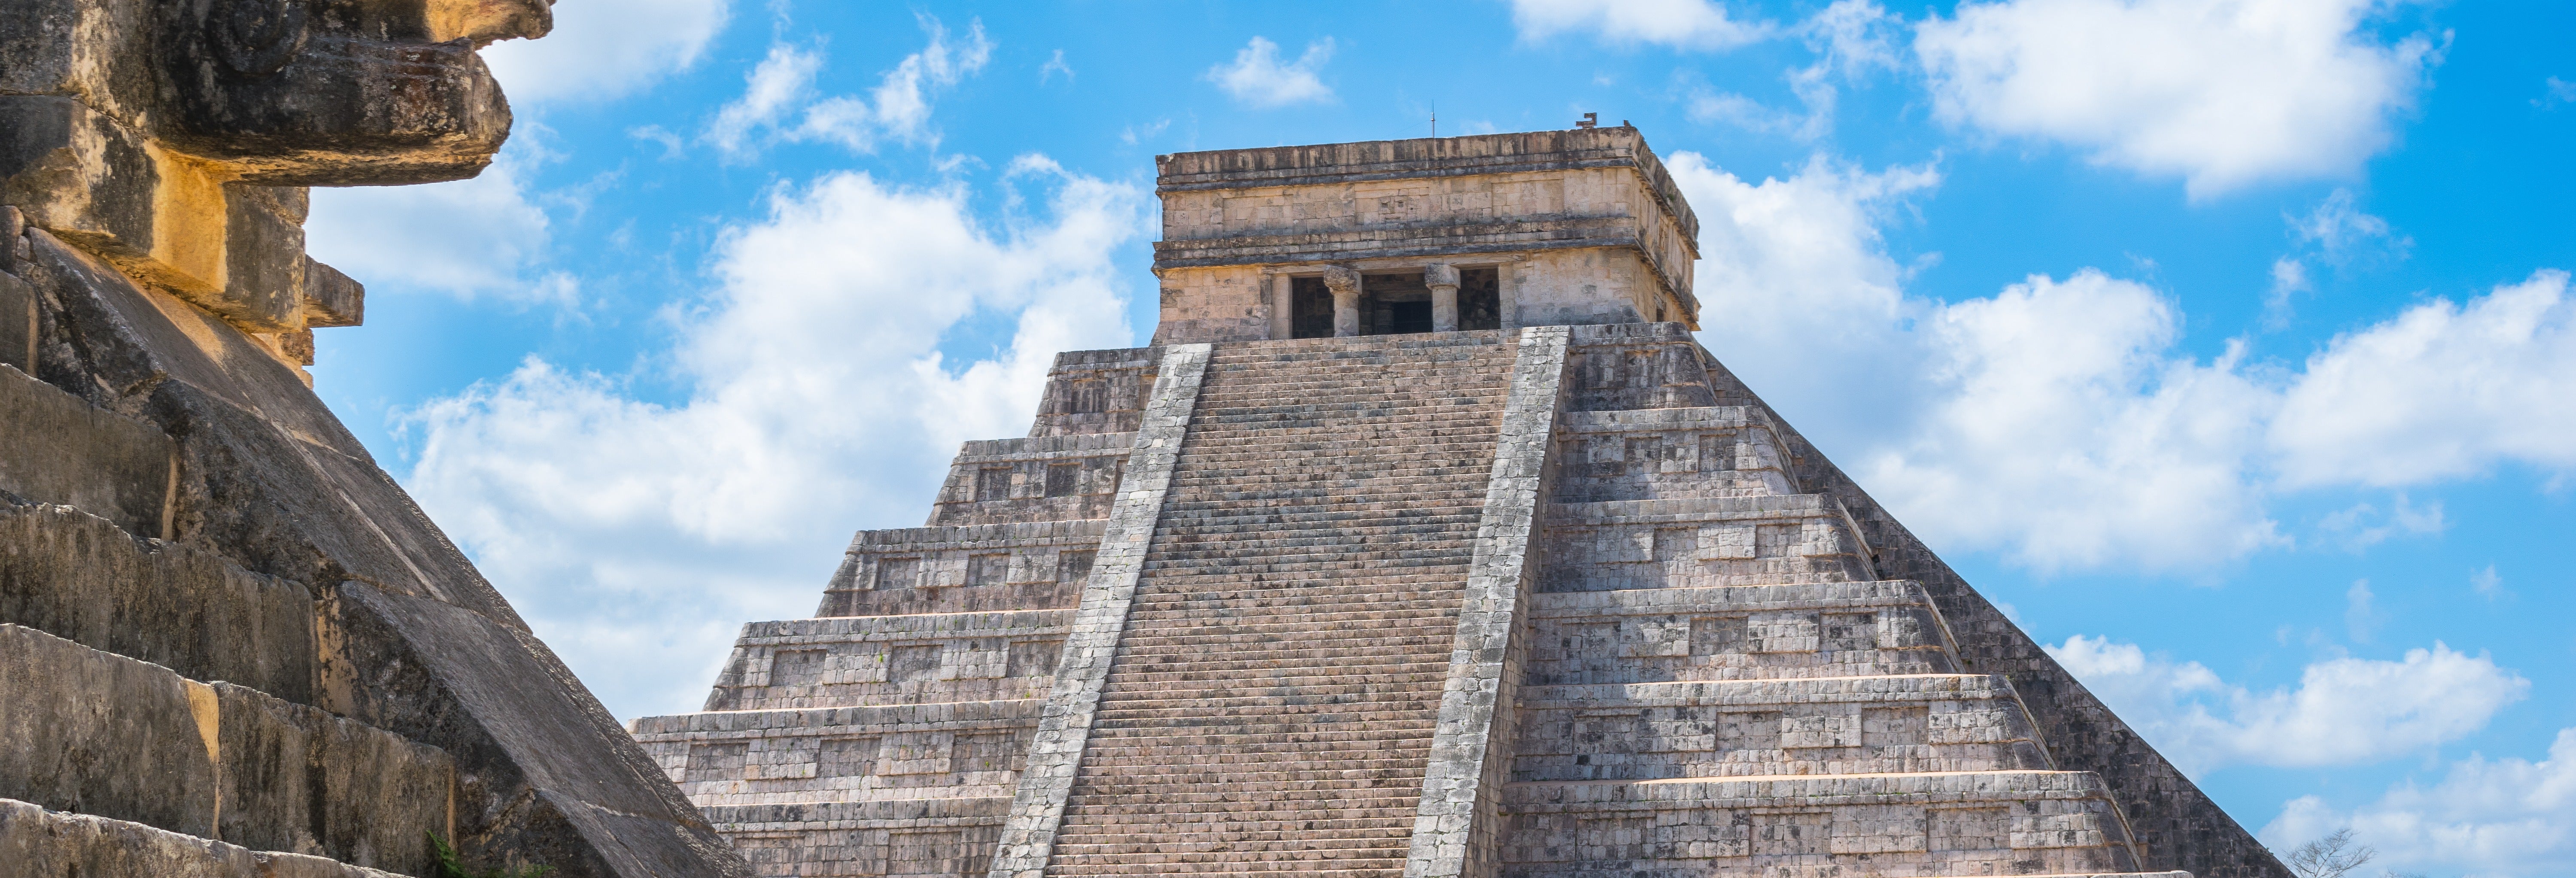 Oferta: Chichén Itzá + Tulum en 2 días